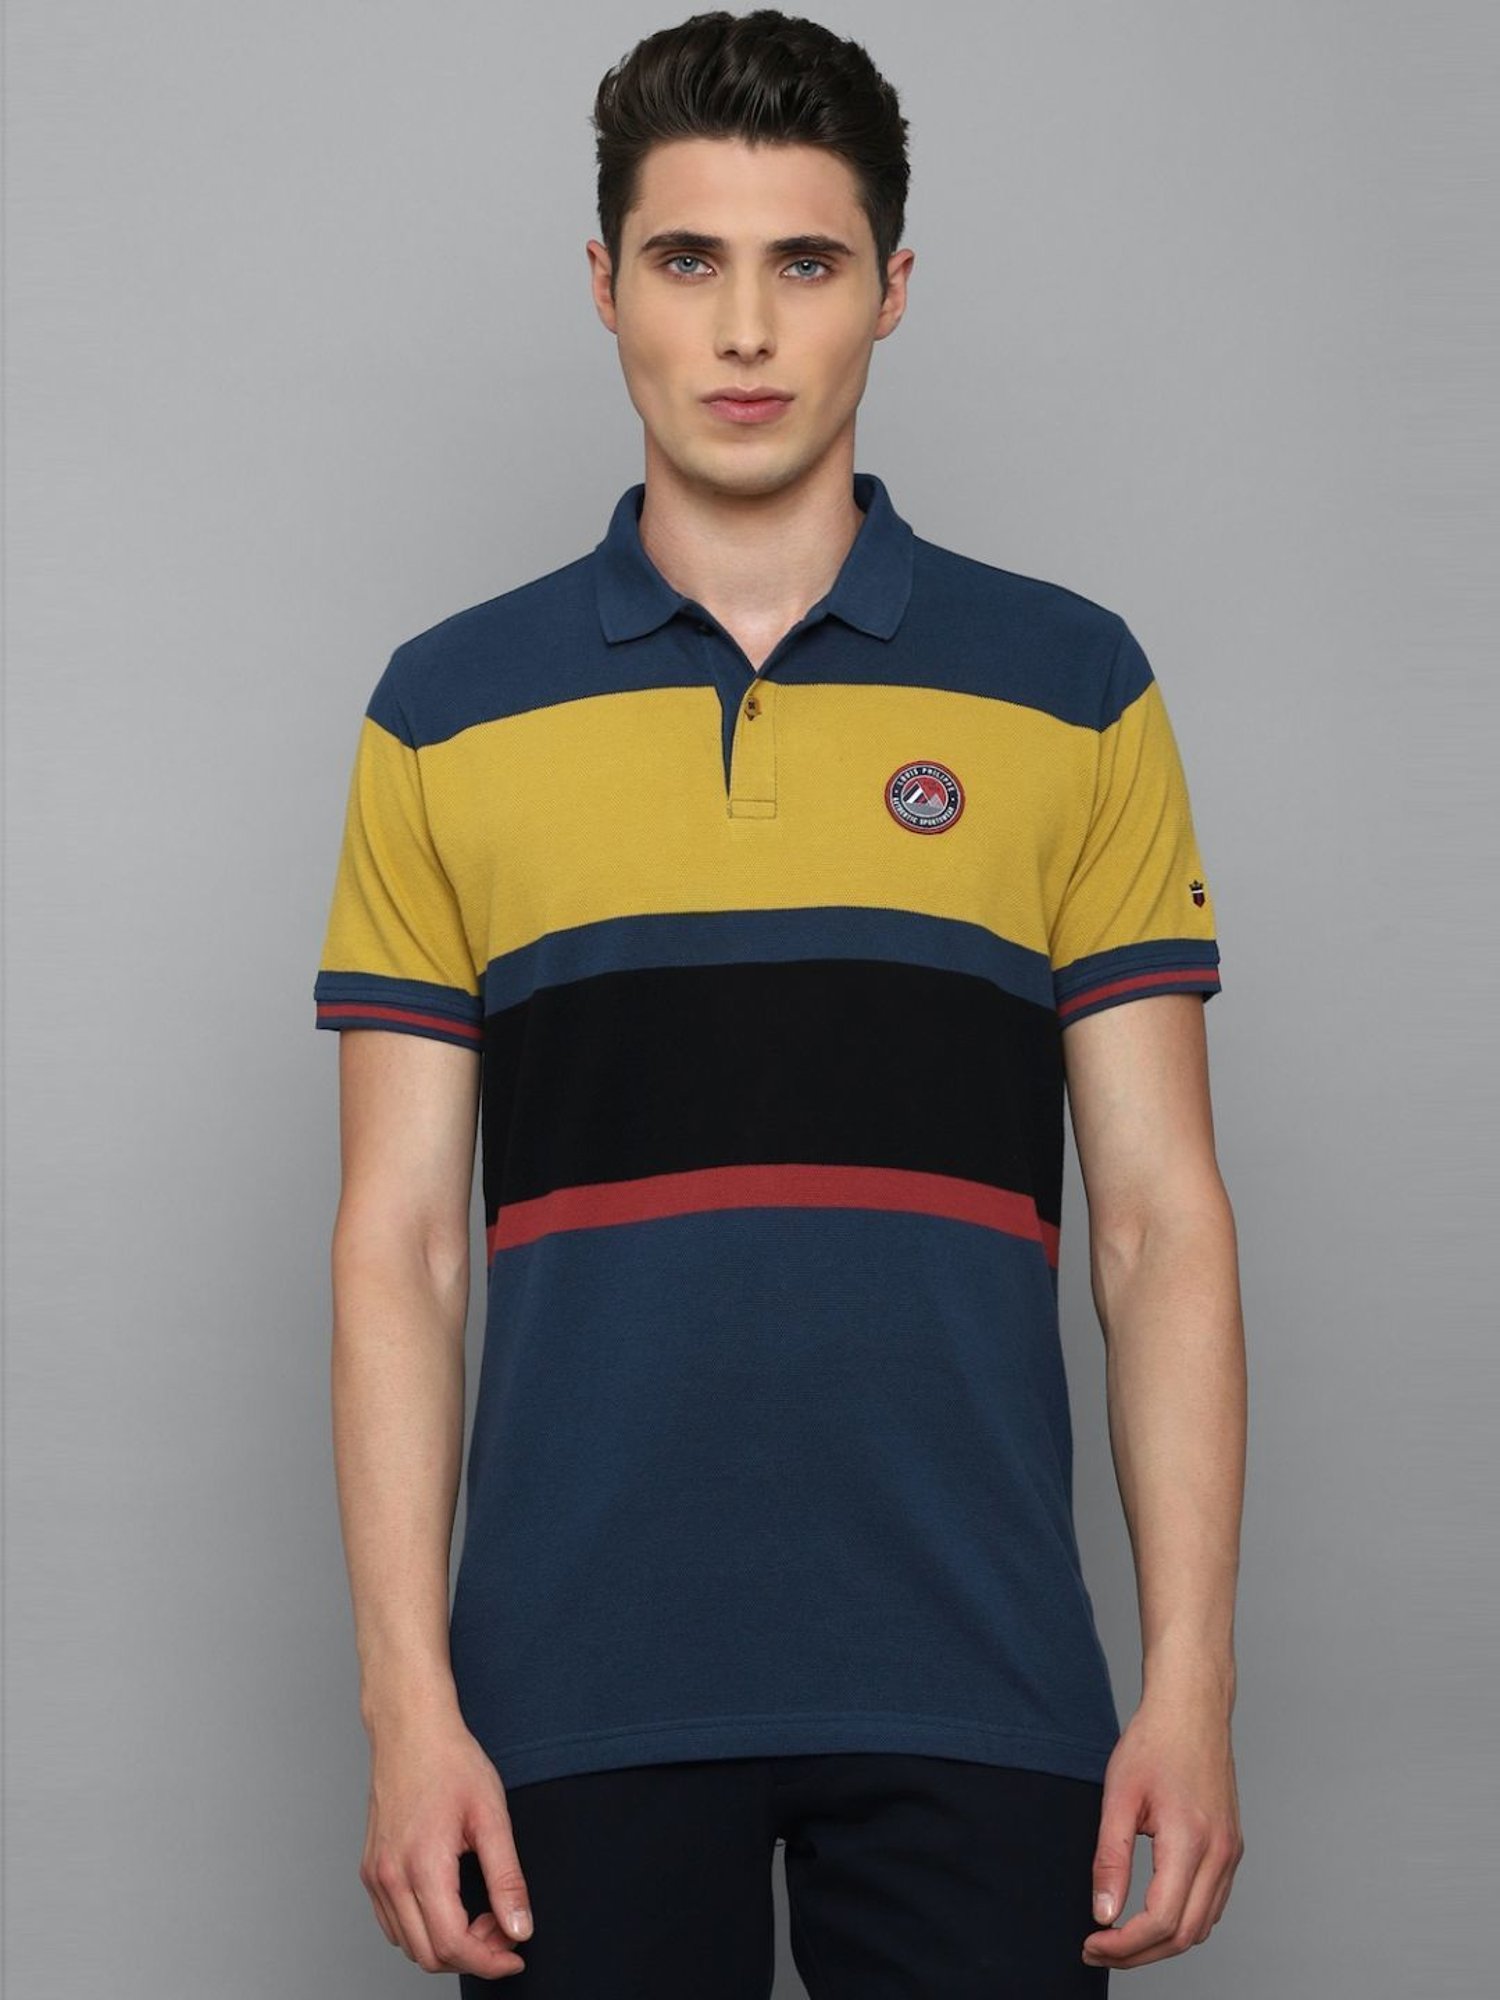 Buy Louis Philippe Sport Blue Cotton Polo T-Shirt for Men Online @ Tata CLiQ